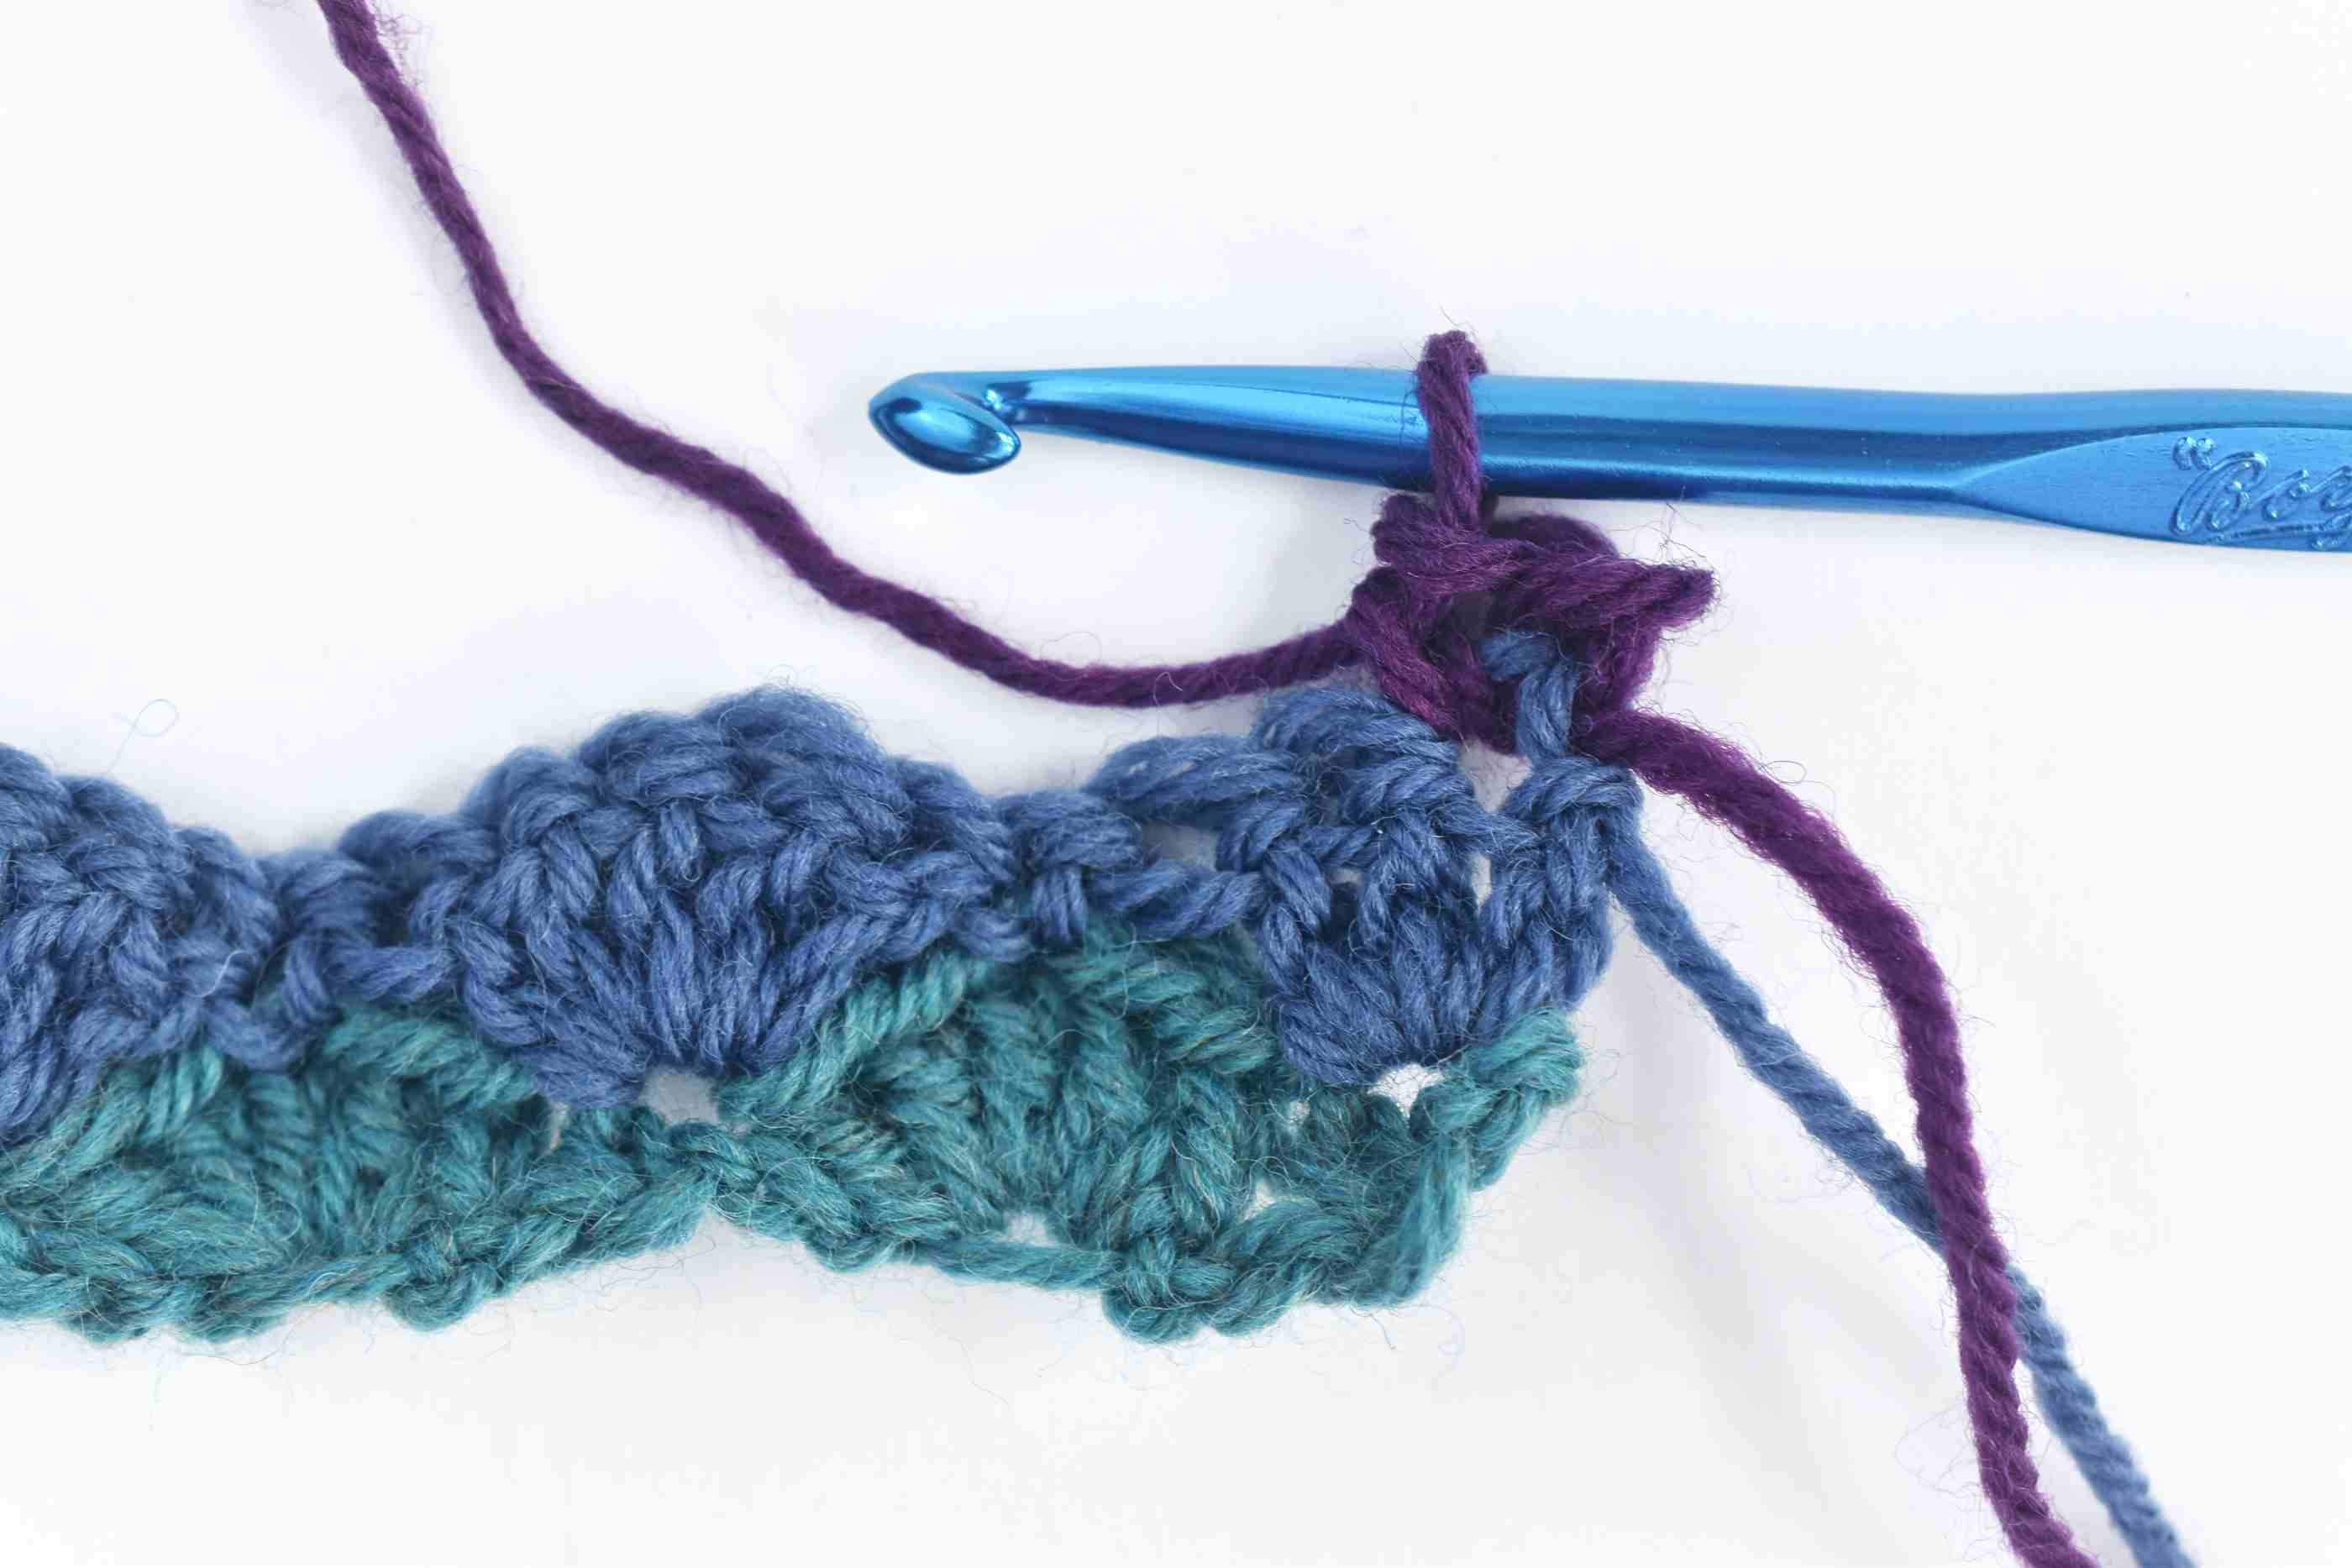 Crochet Shrug Plus Size Pattern Crochet Shrug Pattern Free Plus Size New How To Crochet Shell Stitch